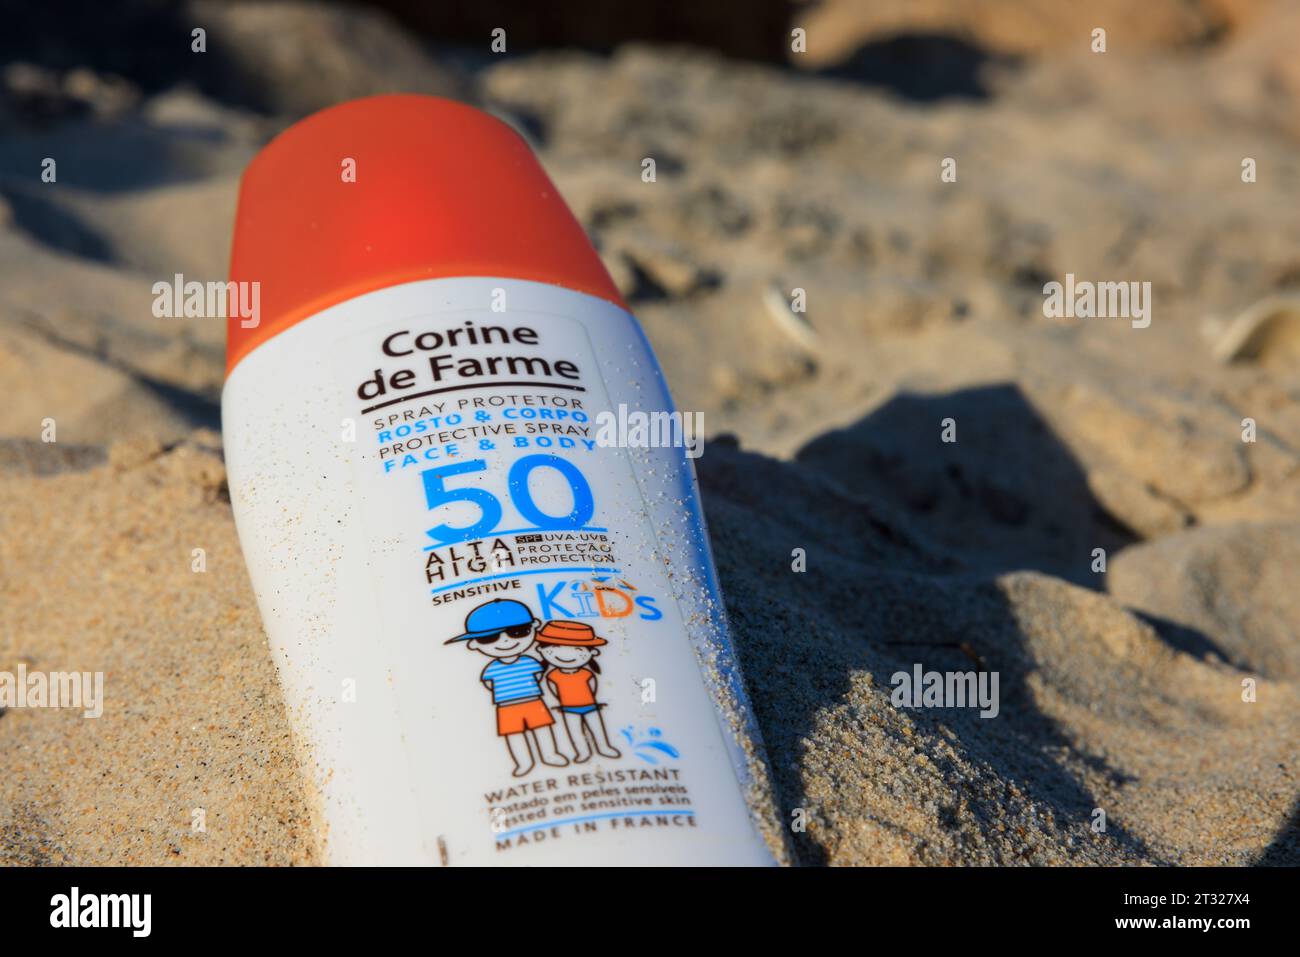 Sun cream bottle in the sand on the beach on Ilha do Farol (Lighthouse Island) off the coast of Olhão in Portugal. Stock Photo